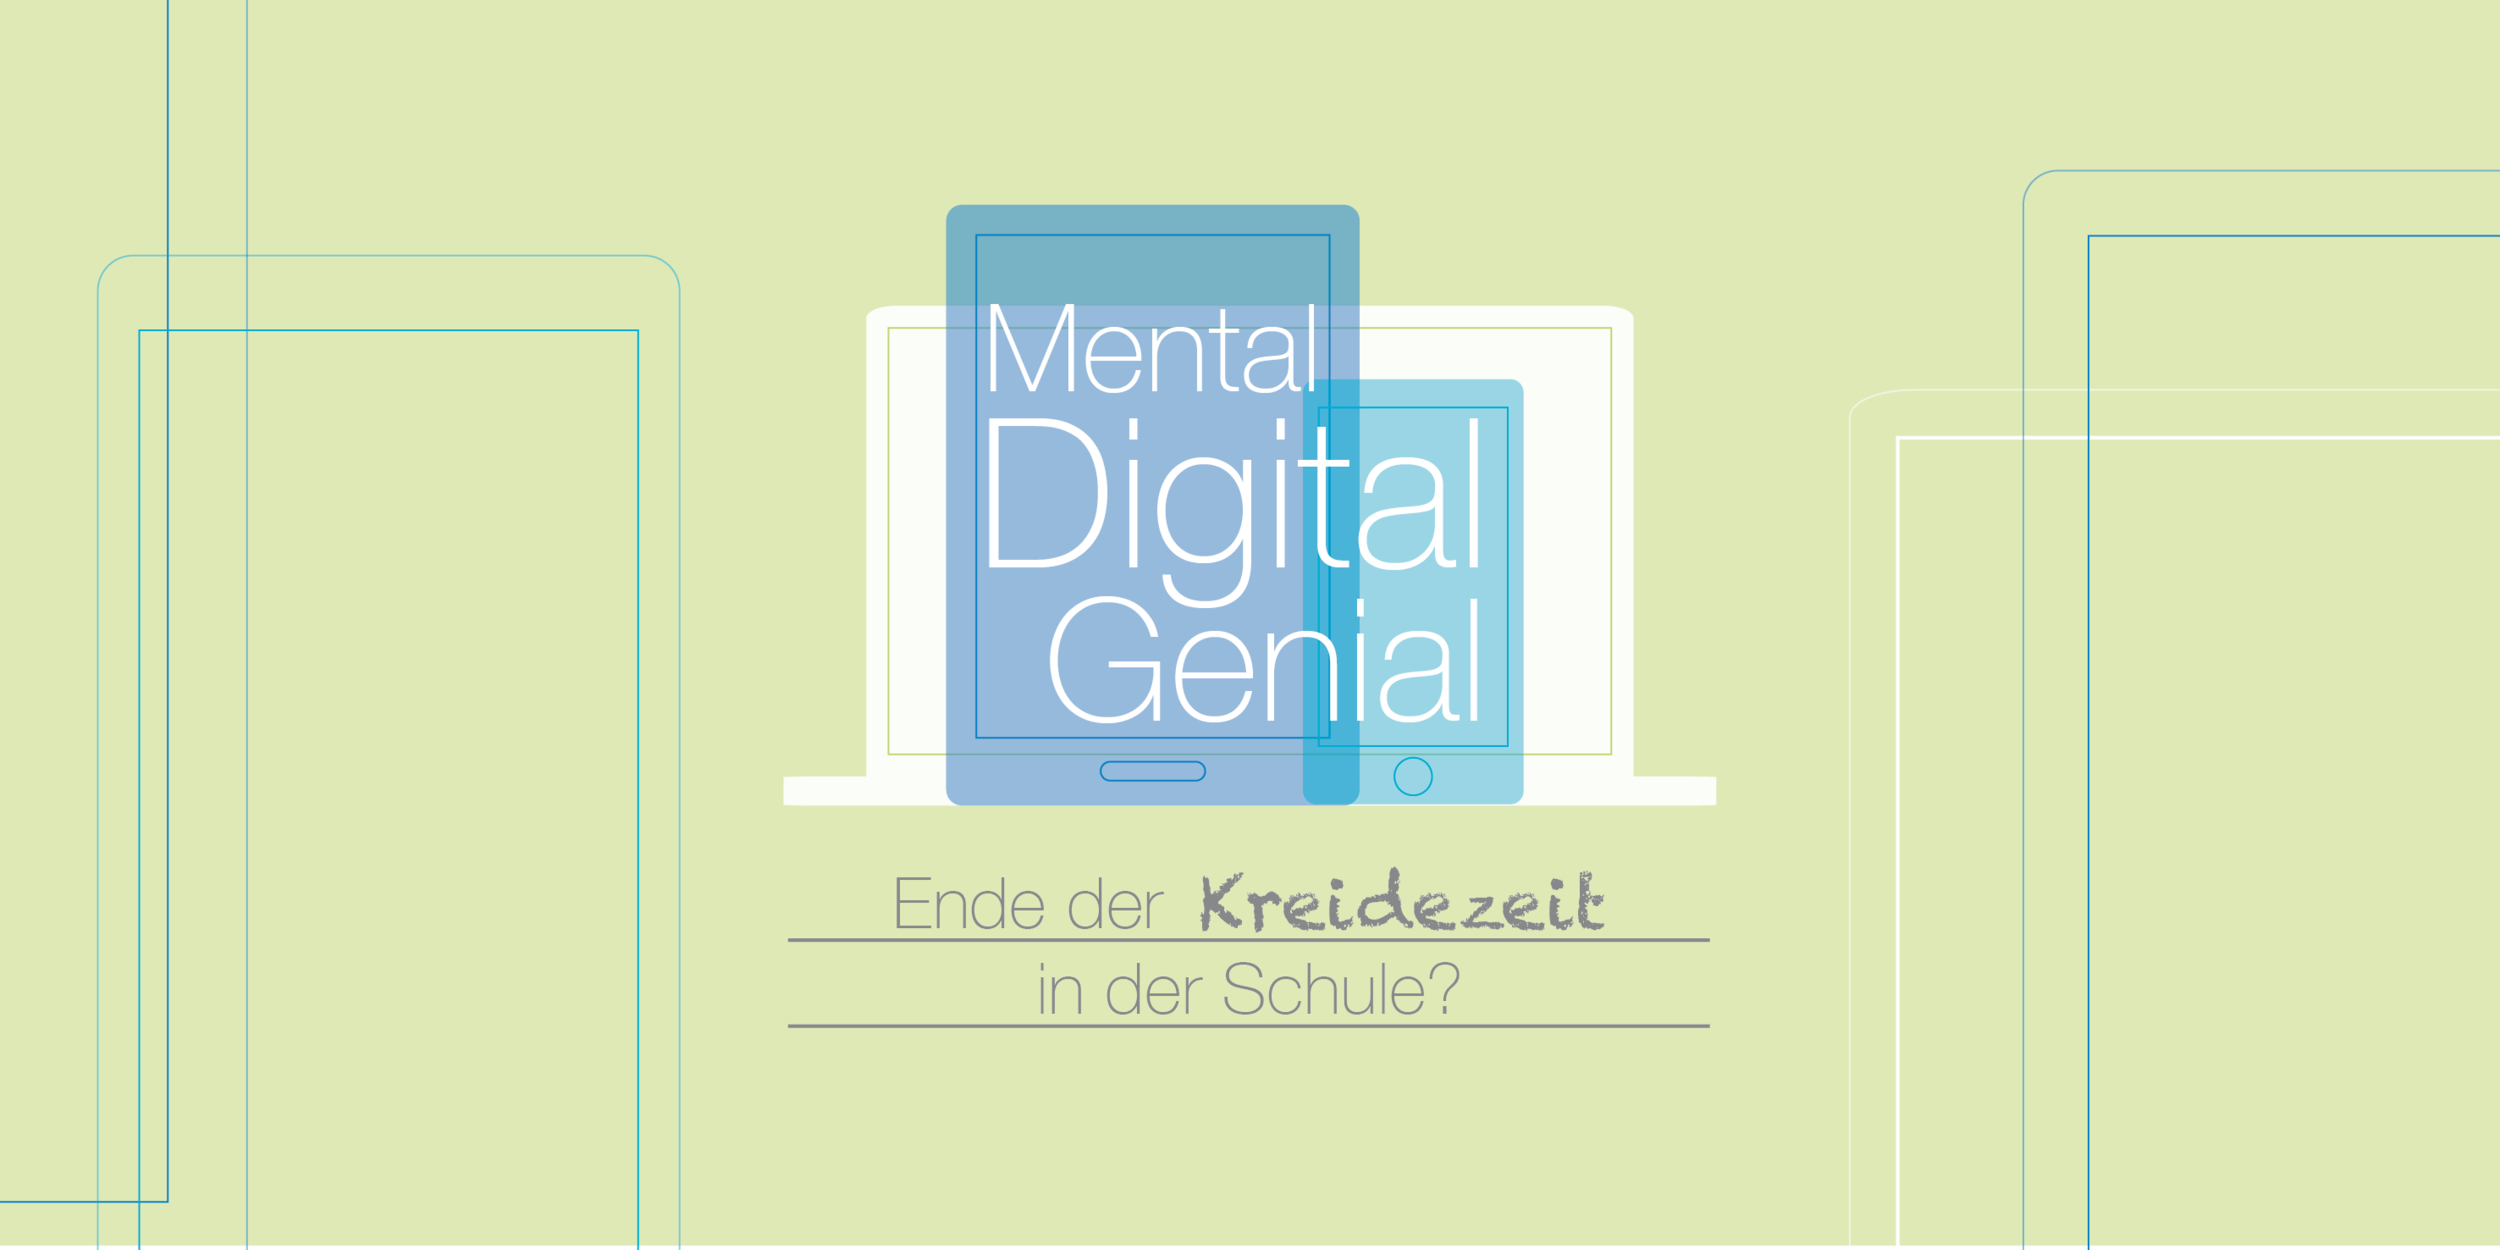 Mental Digital Genial_Hintergrund farbig +UT-01.png